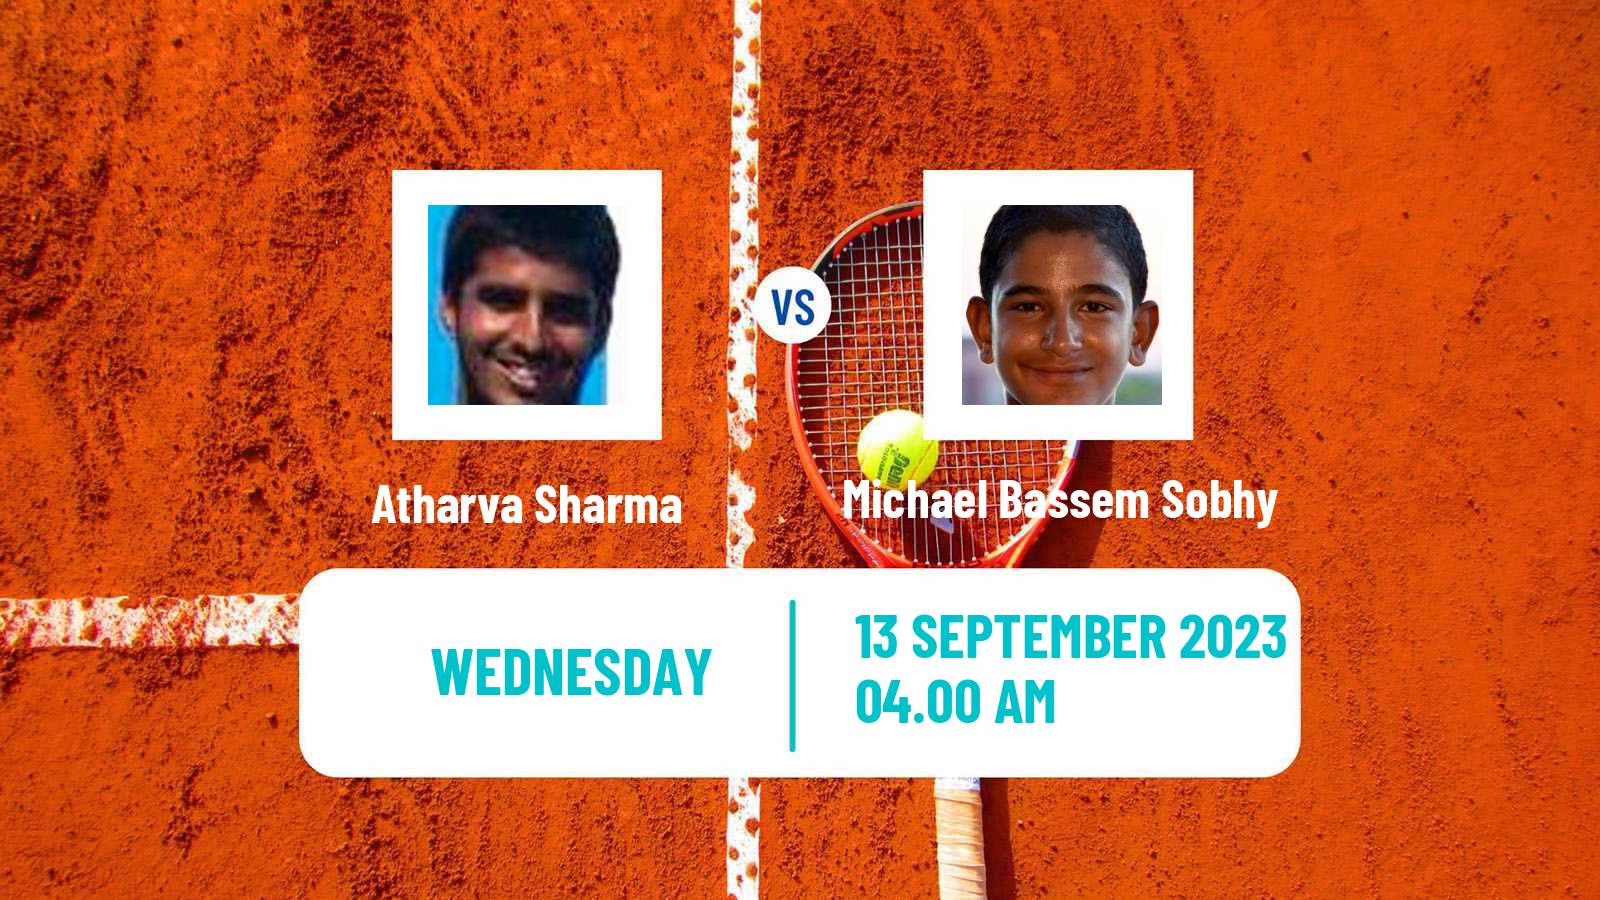 Tennis ITF M25 Kigali 2 Men Atharva Sharma - Michael Bassem Sobhy